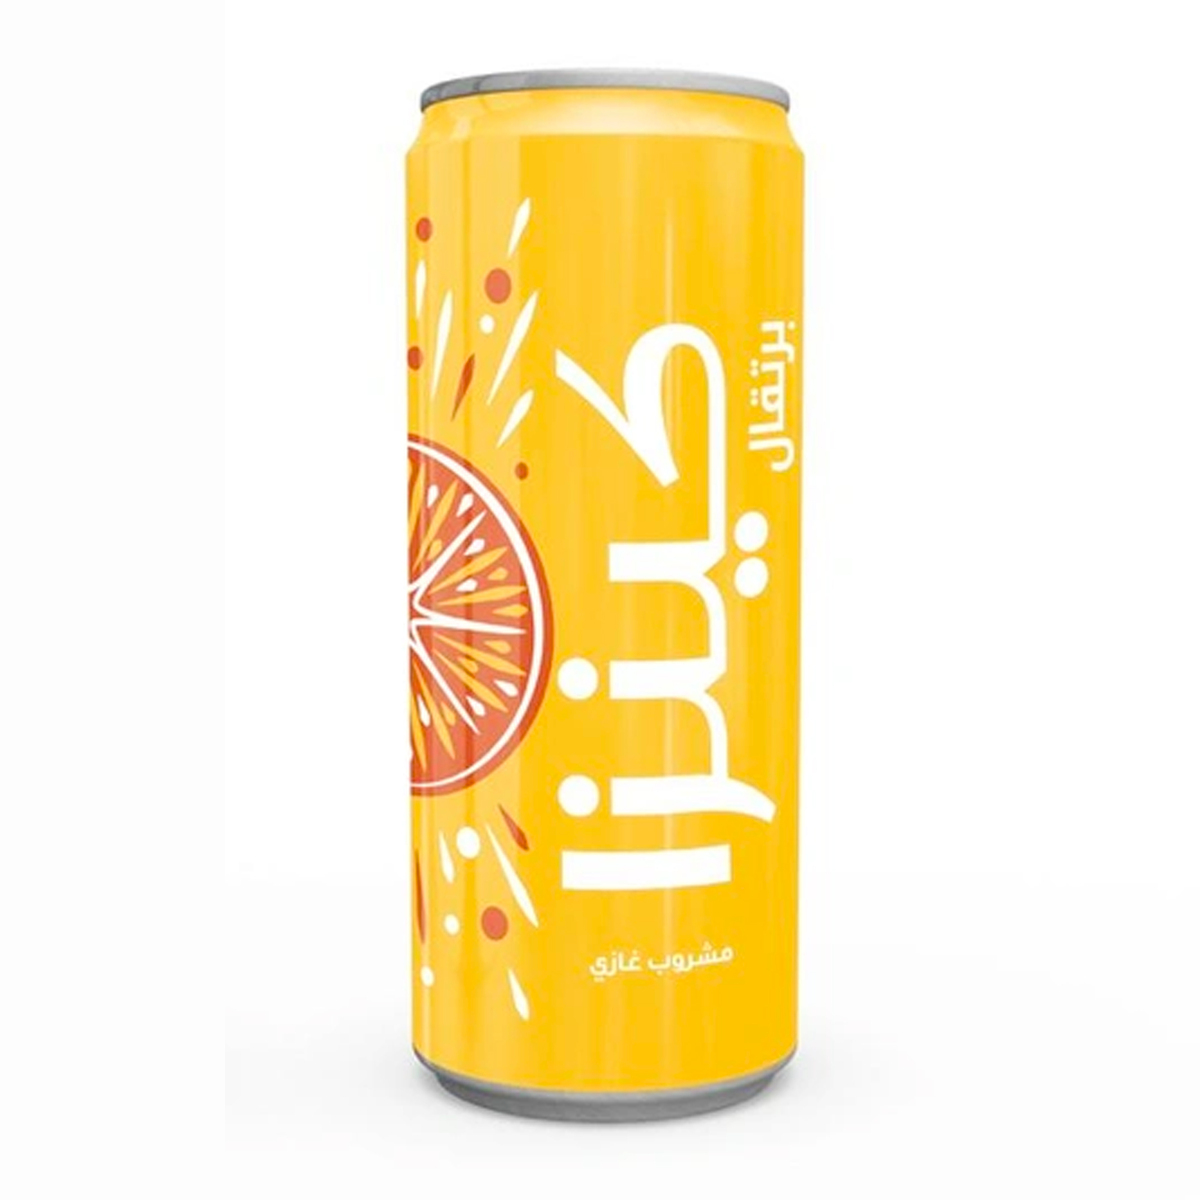 Kinza Carbonated Drink Orange 250 ml